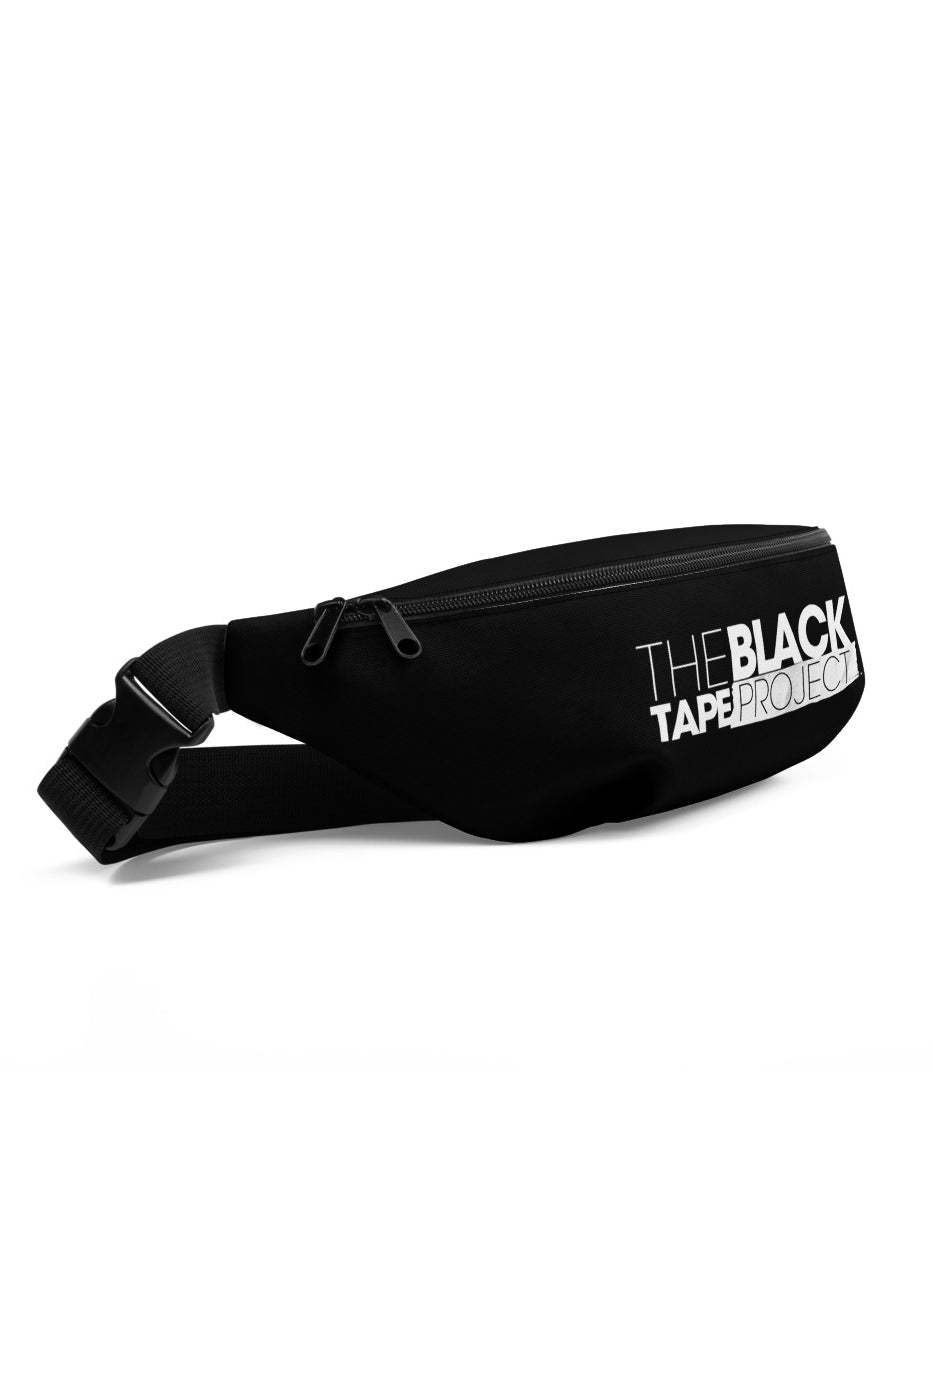 BTP Fanny Pack - Black Tape Project